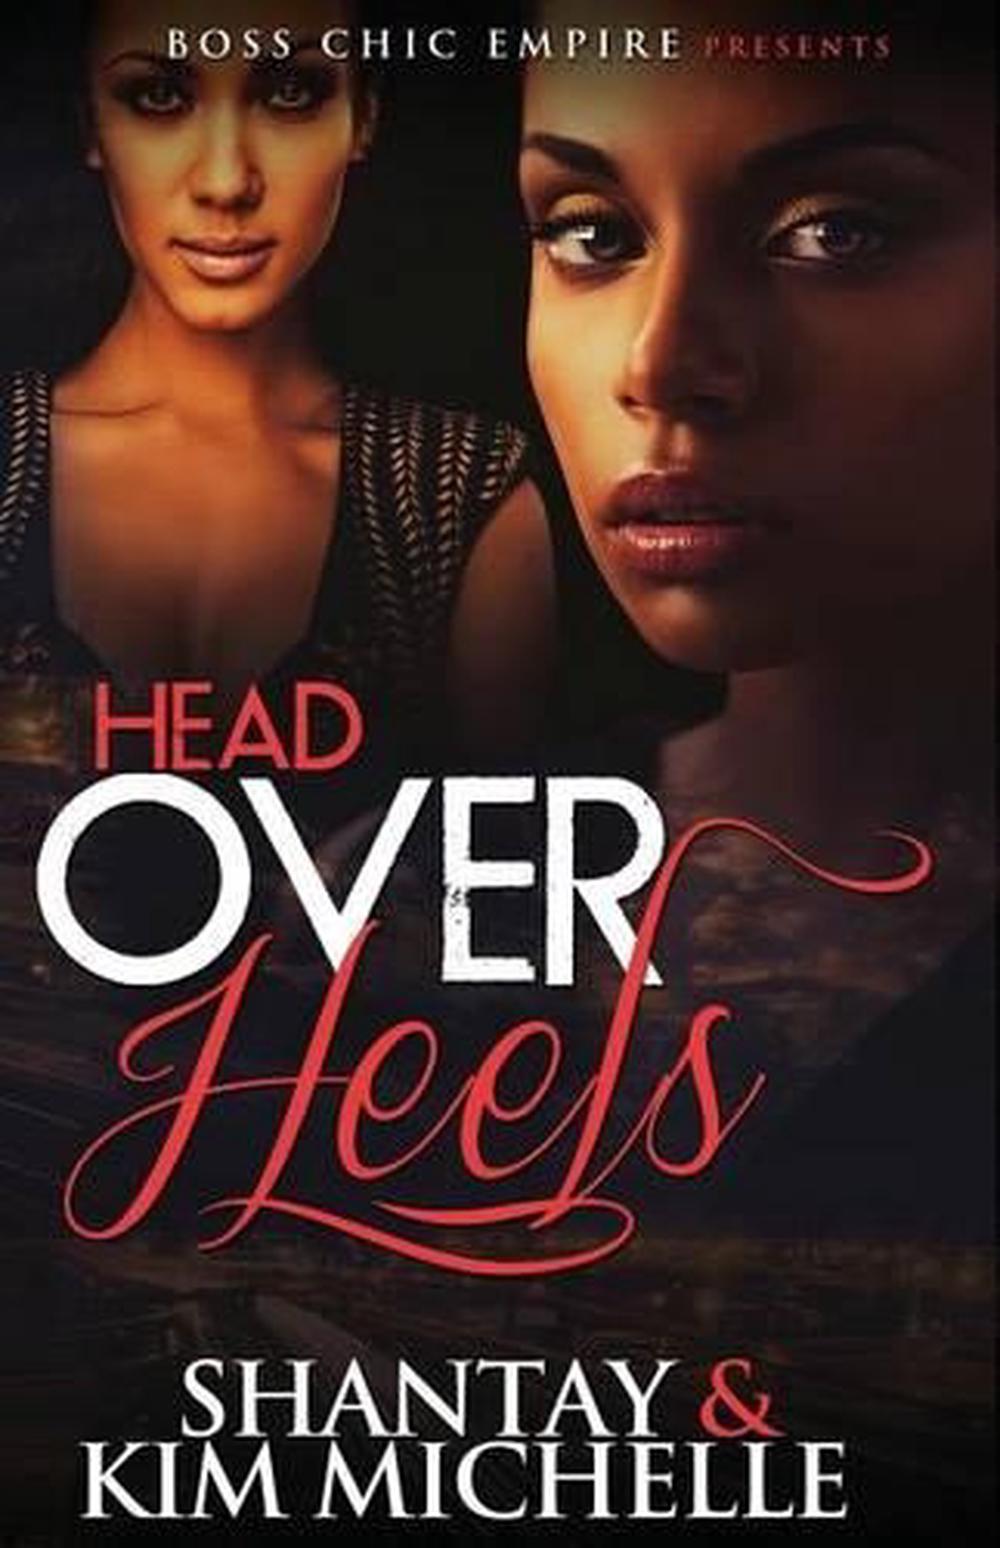 Head Over Heels by Jill Shalvis